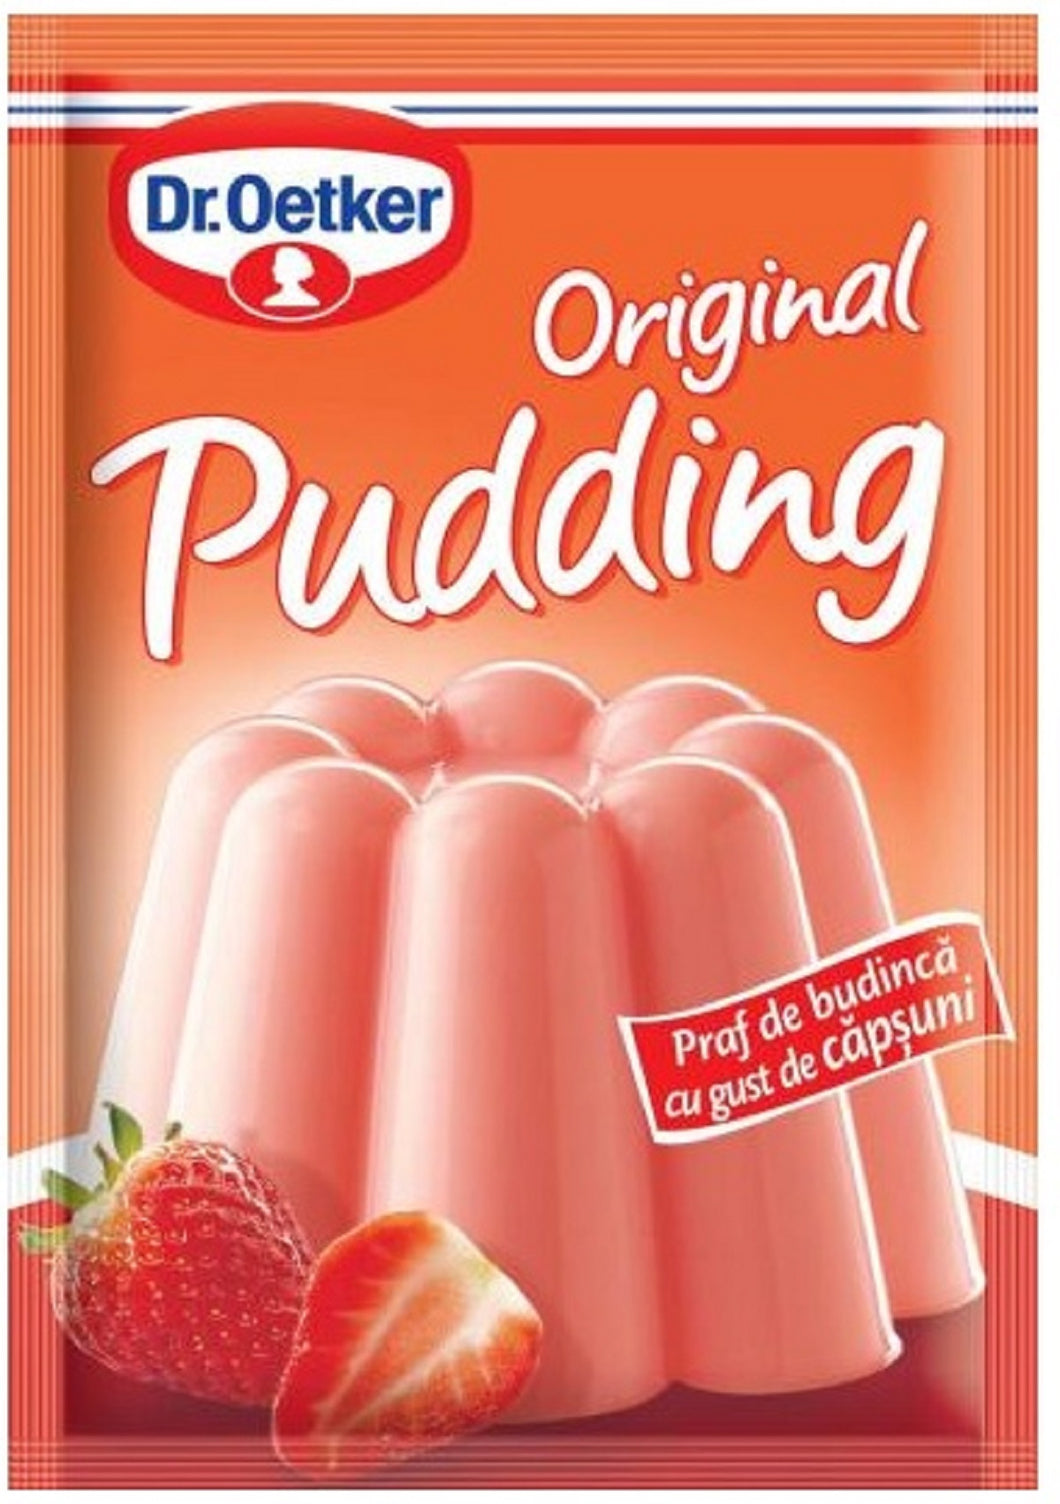 Dr Oetker Original Pudding - Capsuni